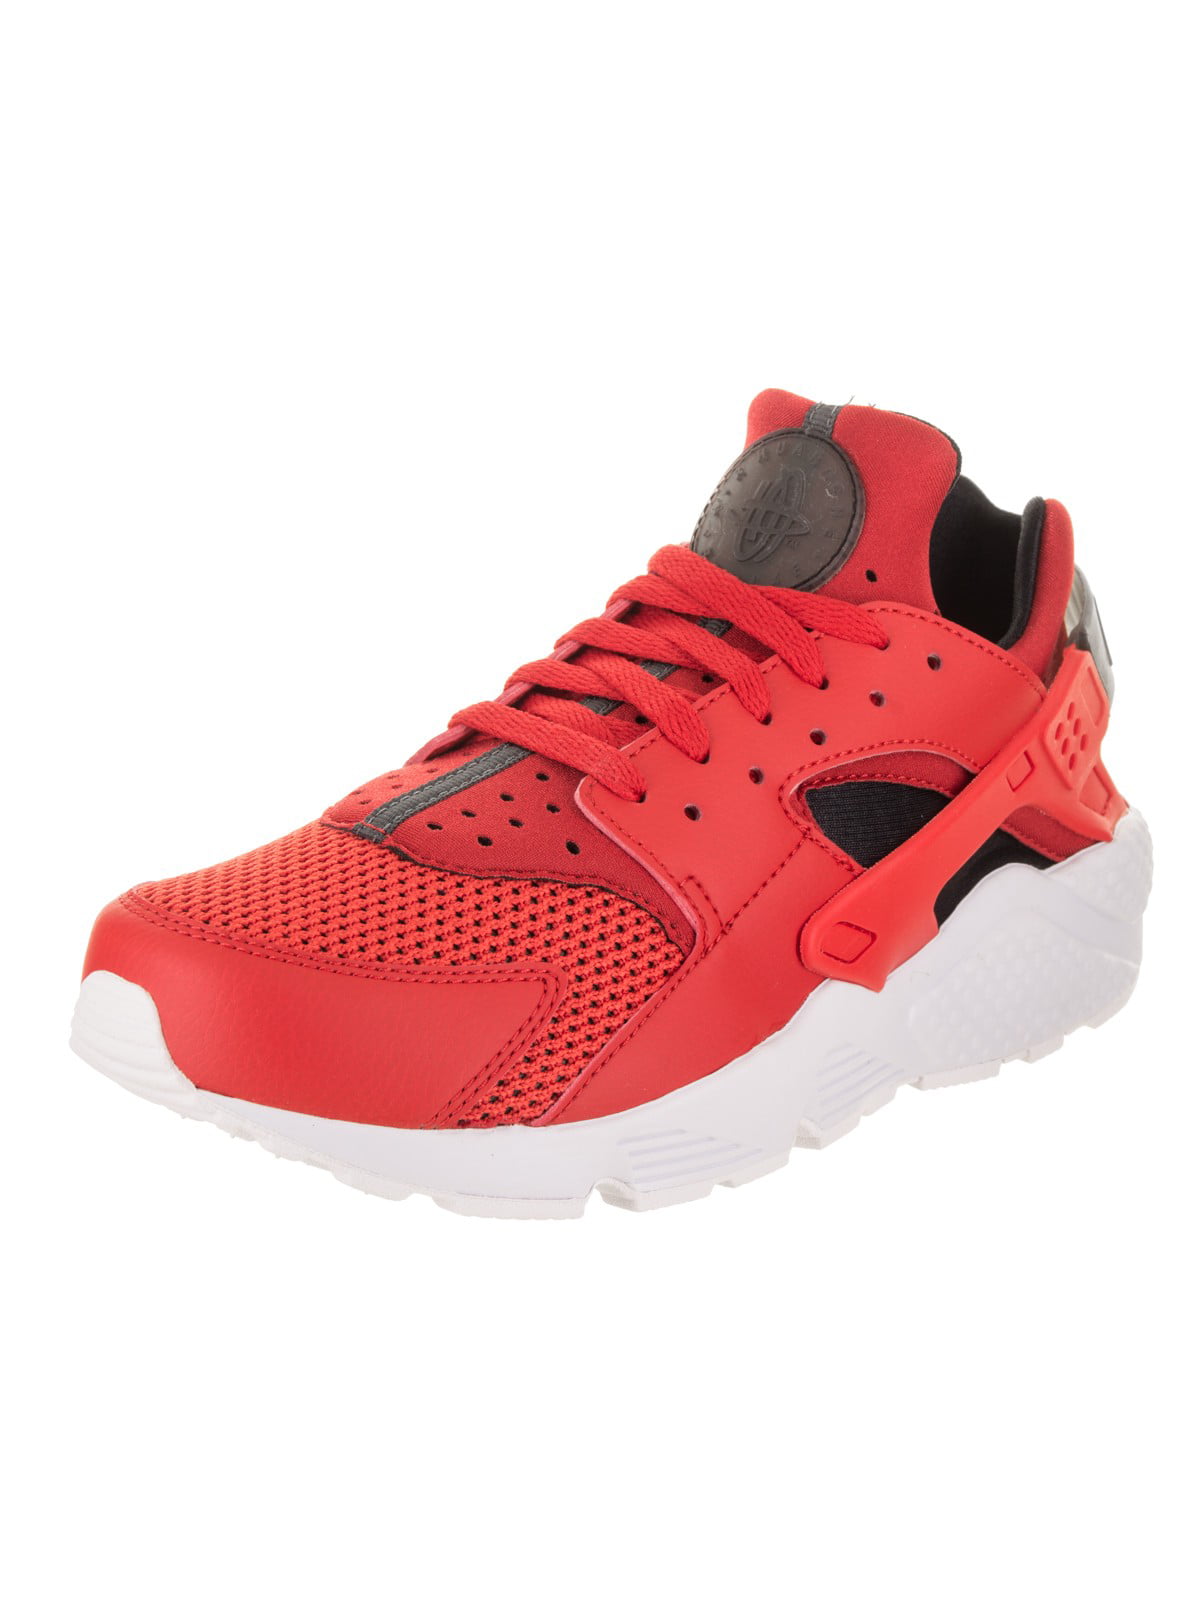 Pertenecer a aleación Vago Nike 318429-609: Men's Air Huarache Habanero Red/Black/White Running Shoe  (8.5 D(M) US Men) - Walmart.com